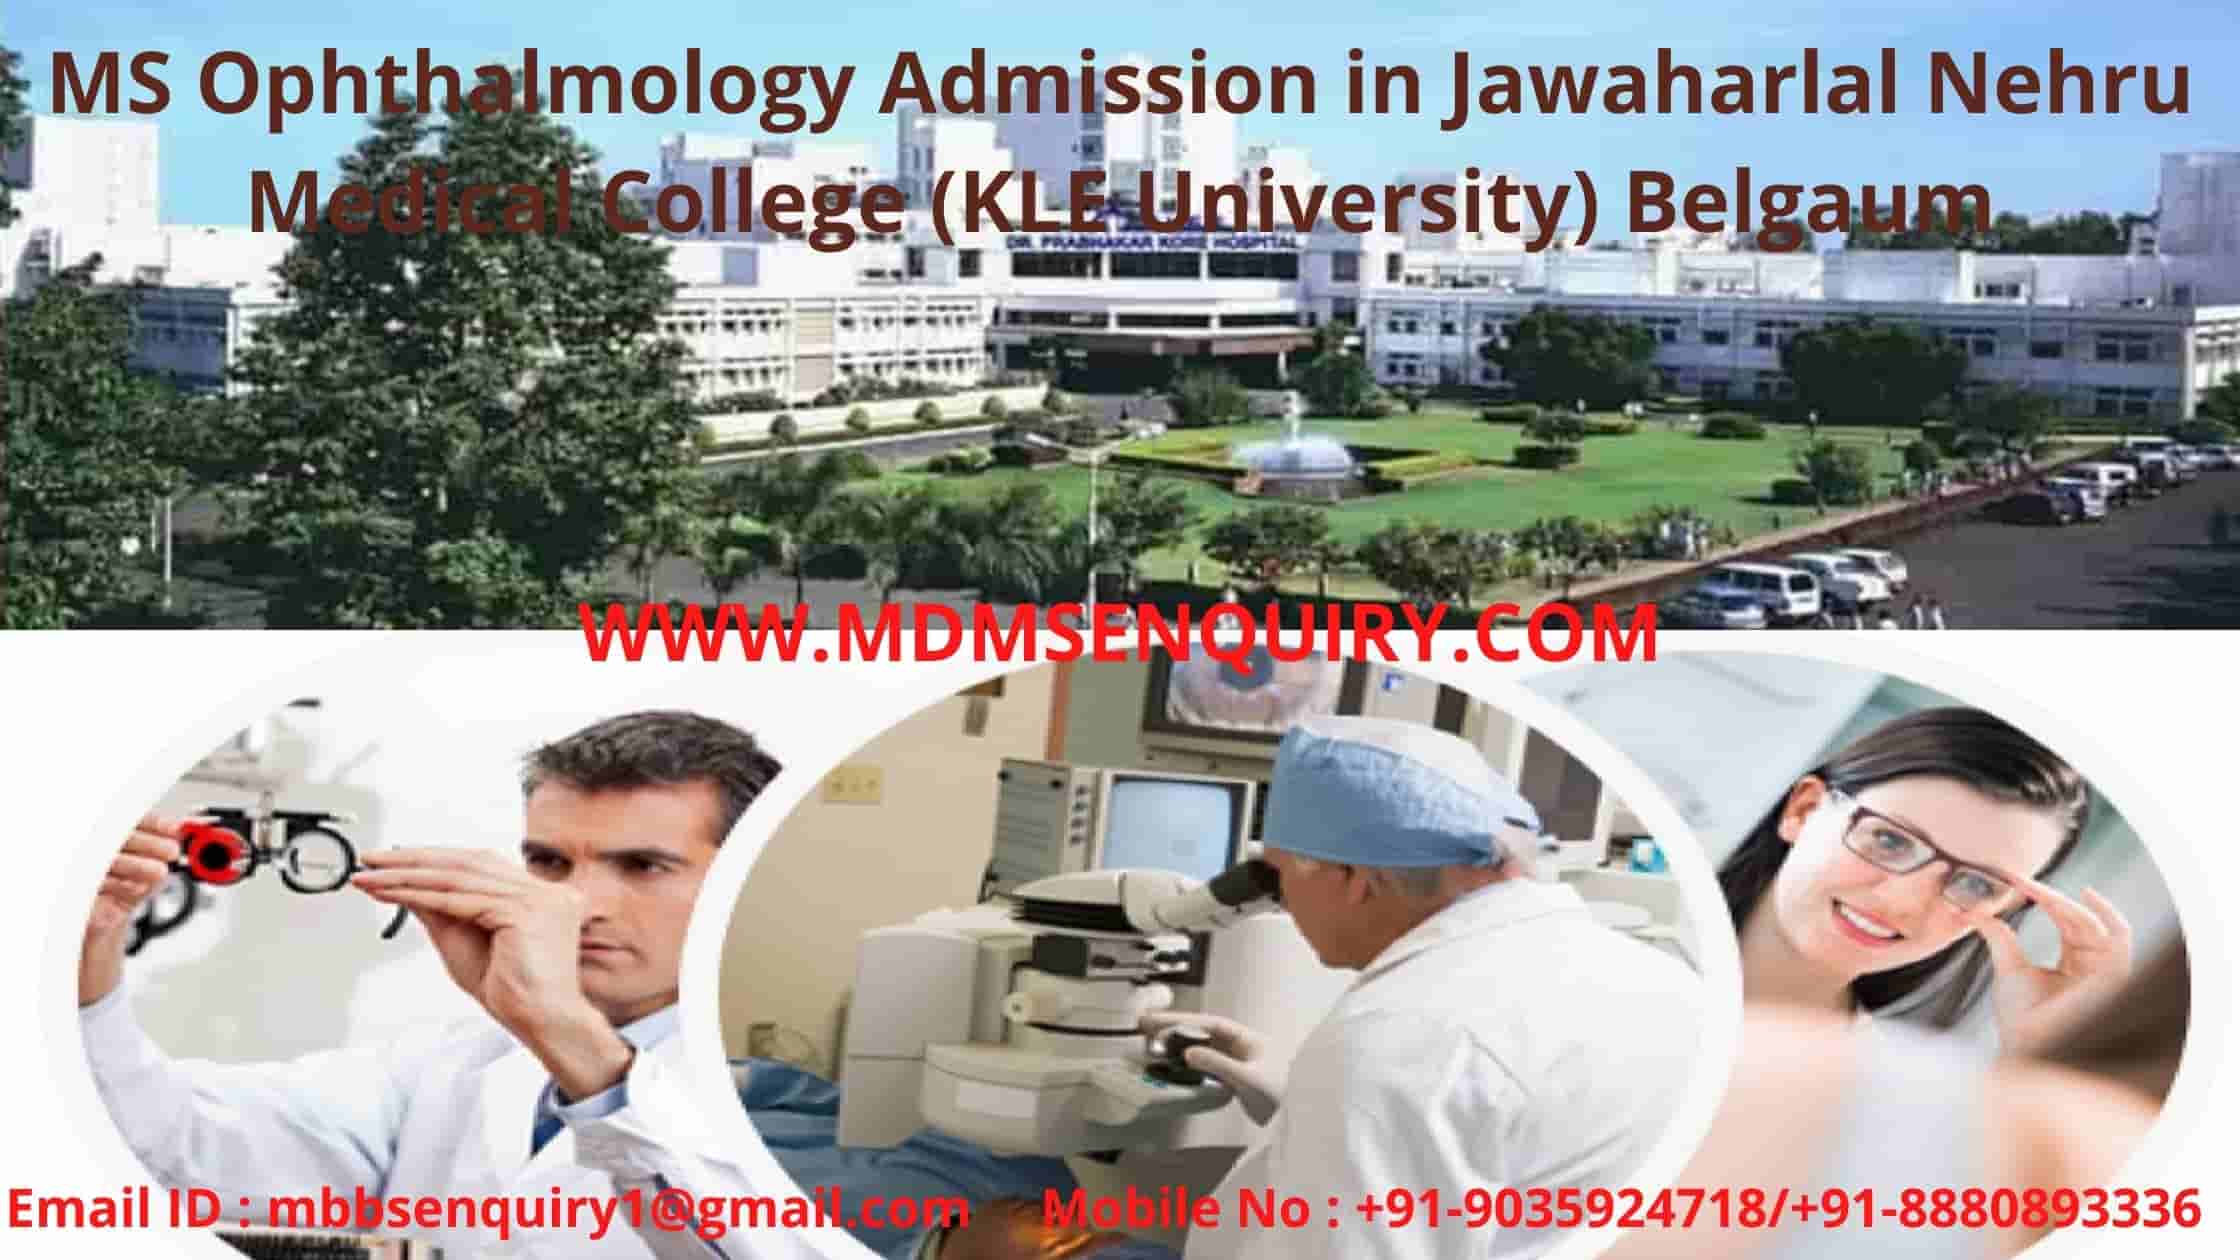 MS Ophthalmology admission in Jawaharlal Nehru Medical College (KLE University) Belgaum